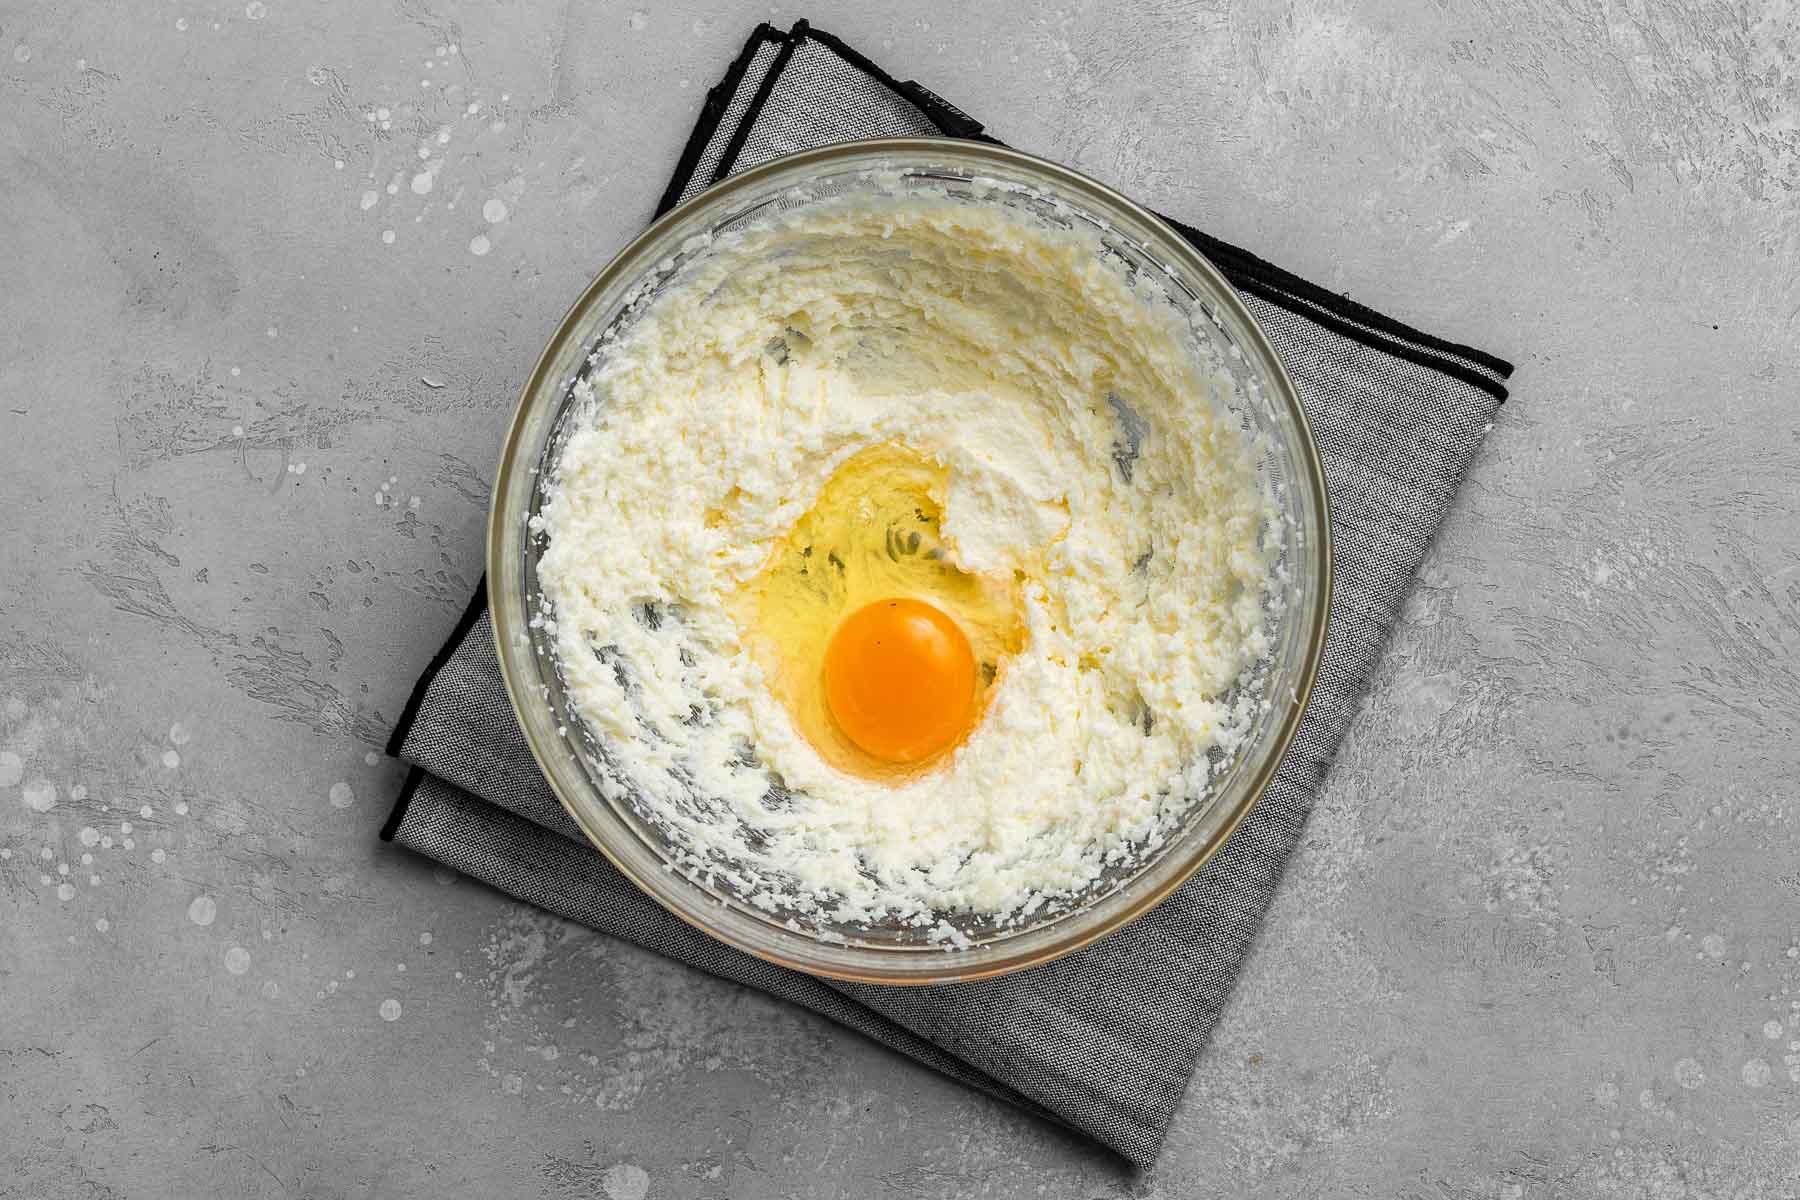 Egg into cake batter bowl.